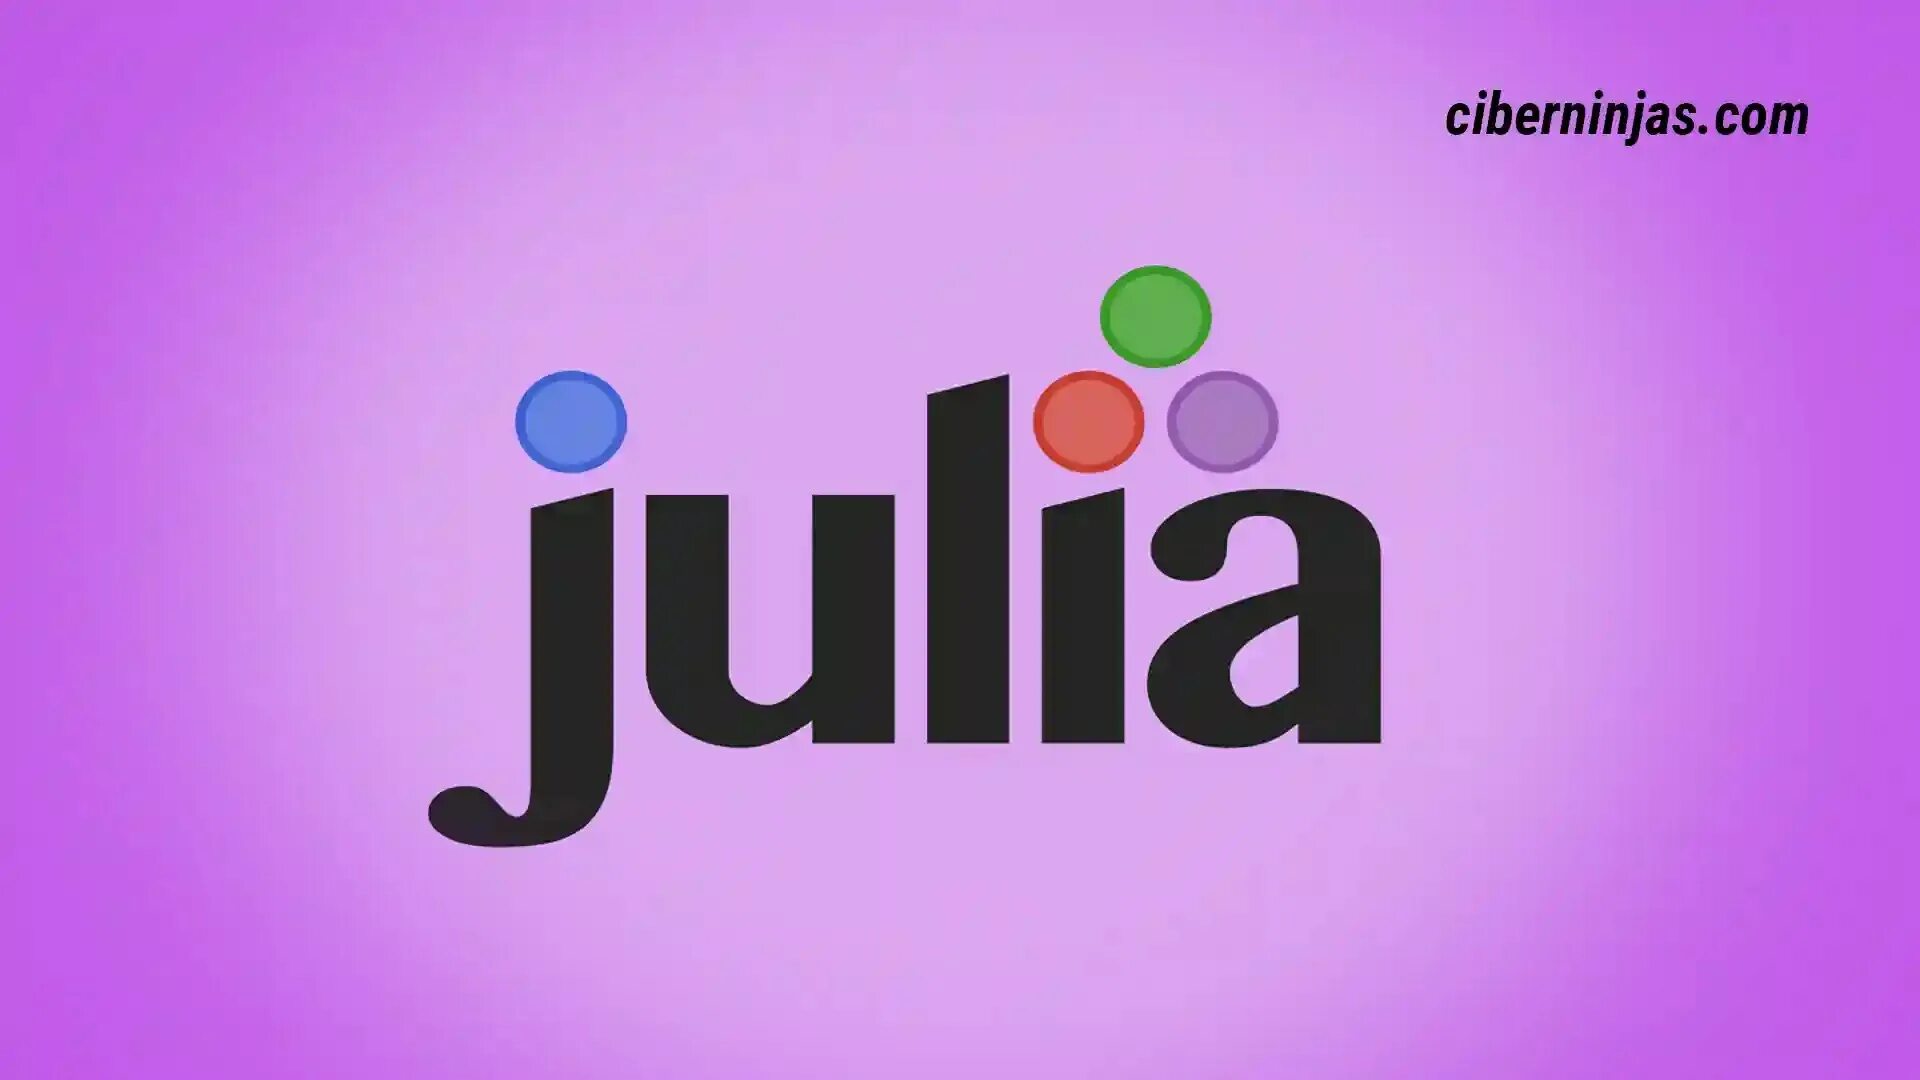 Julia программирование. Julia язык программирования. Логотипы языков программирования. Программирование на Julia. Julia программа.